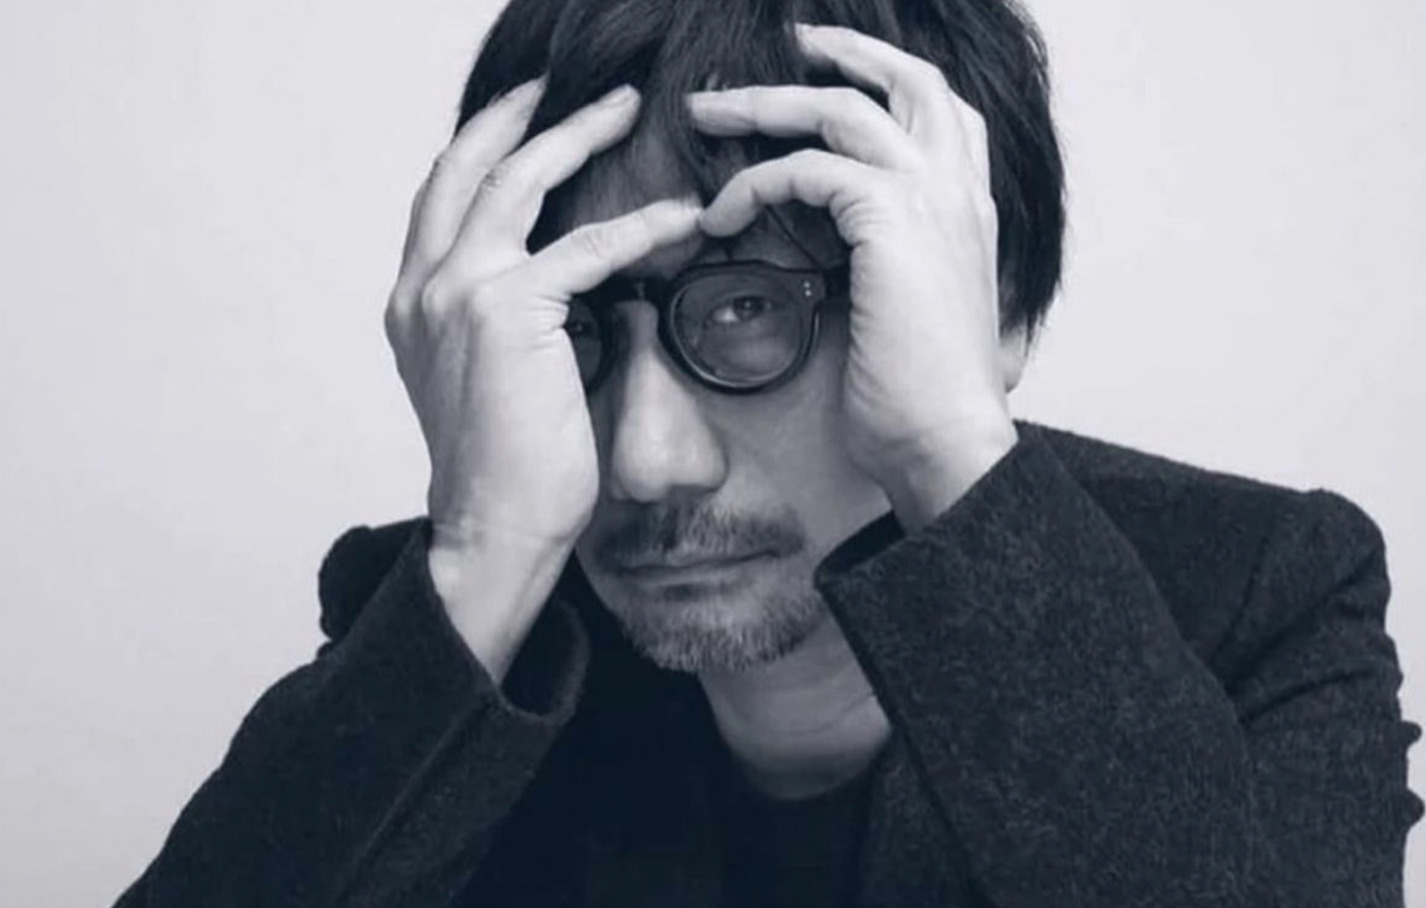 Hideo Kojima Biography - Top 25 Interesting Facts